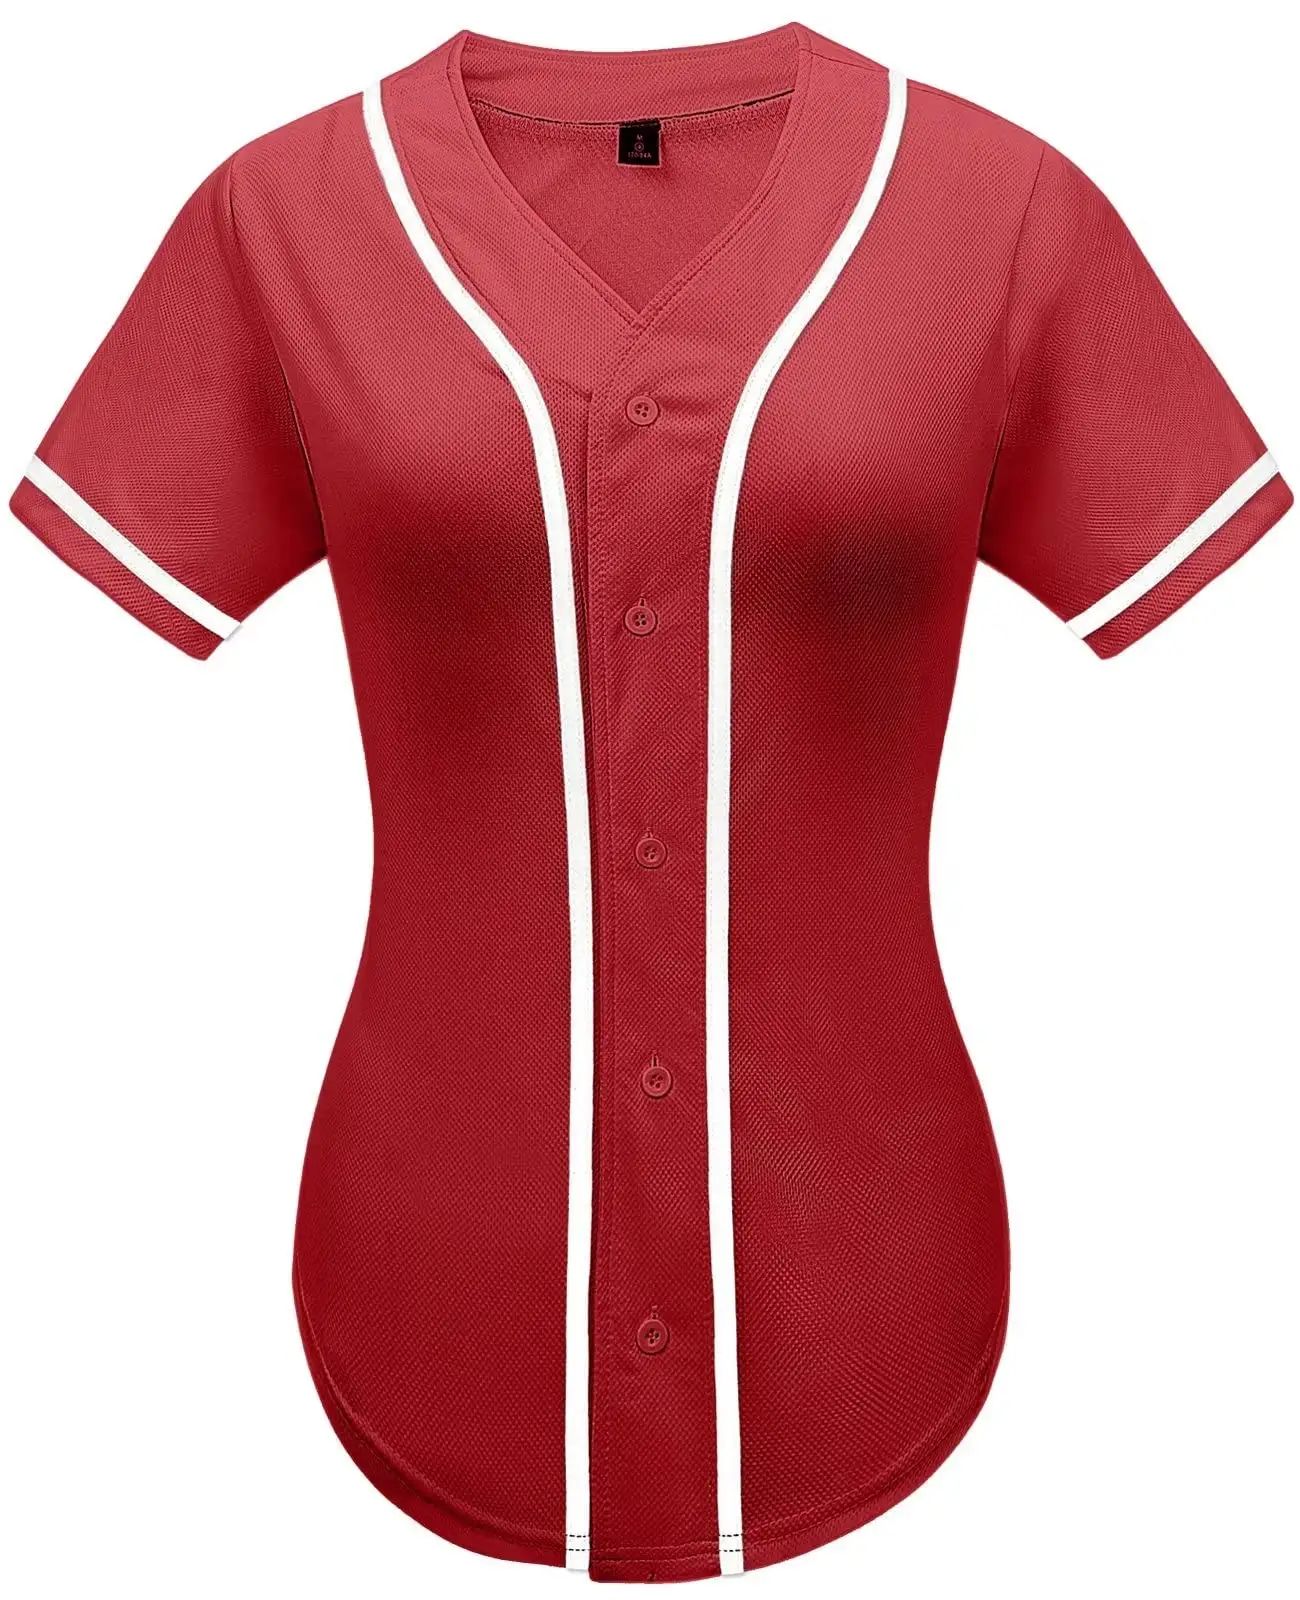 Kaus bisbol wanita, baju baseball berkancing menurun warna polos hip-hop